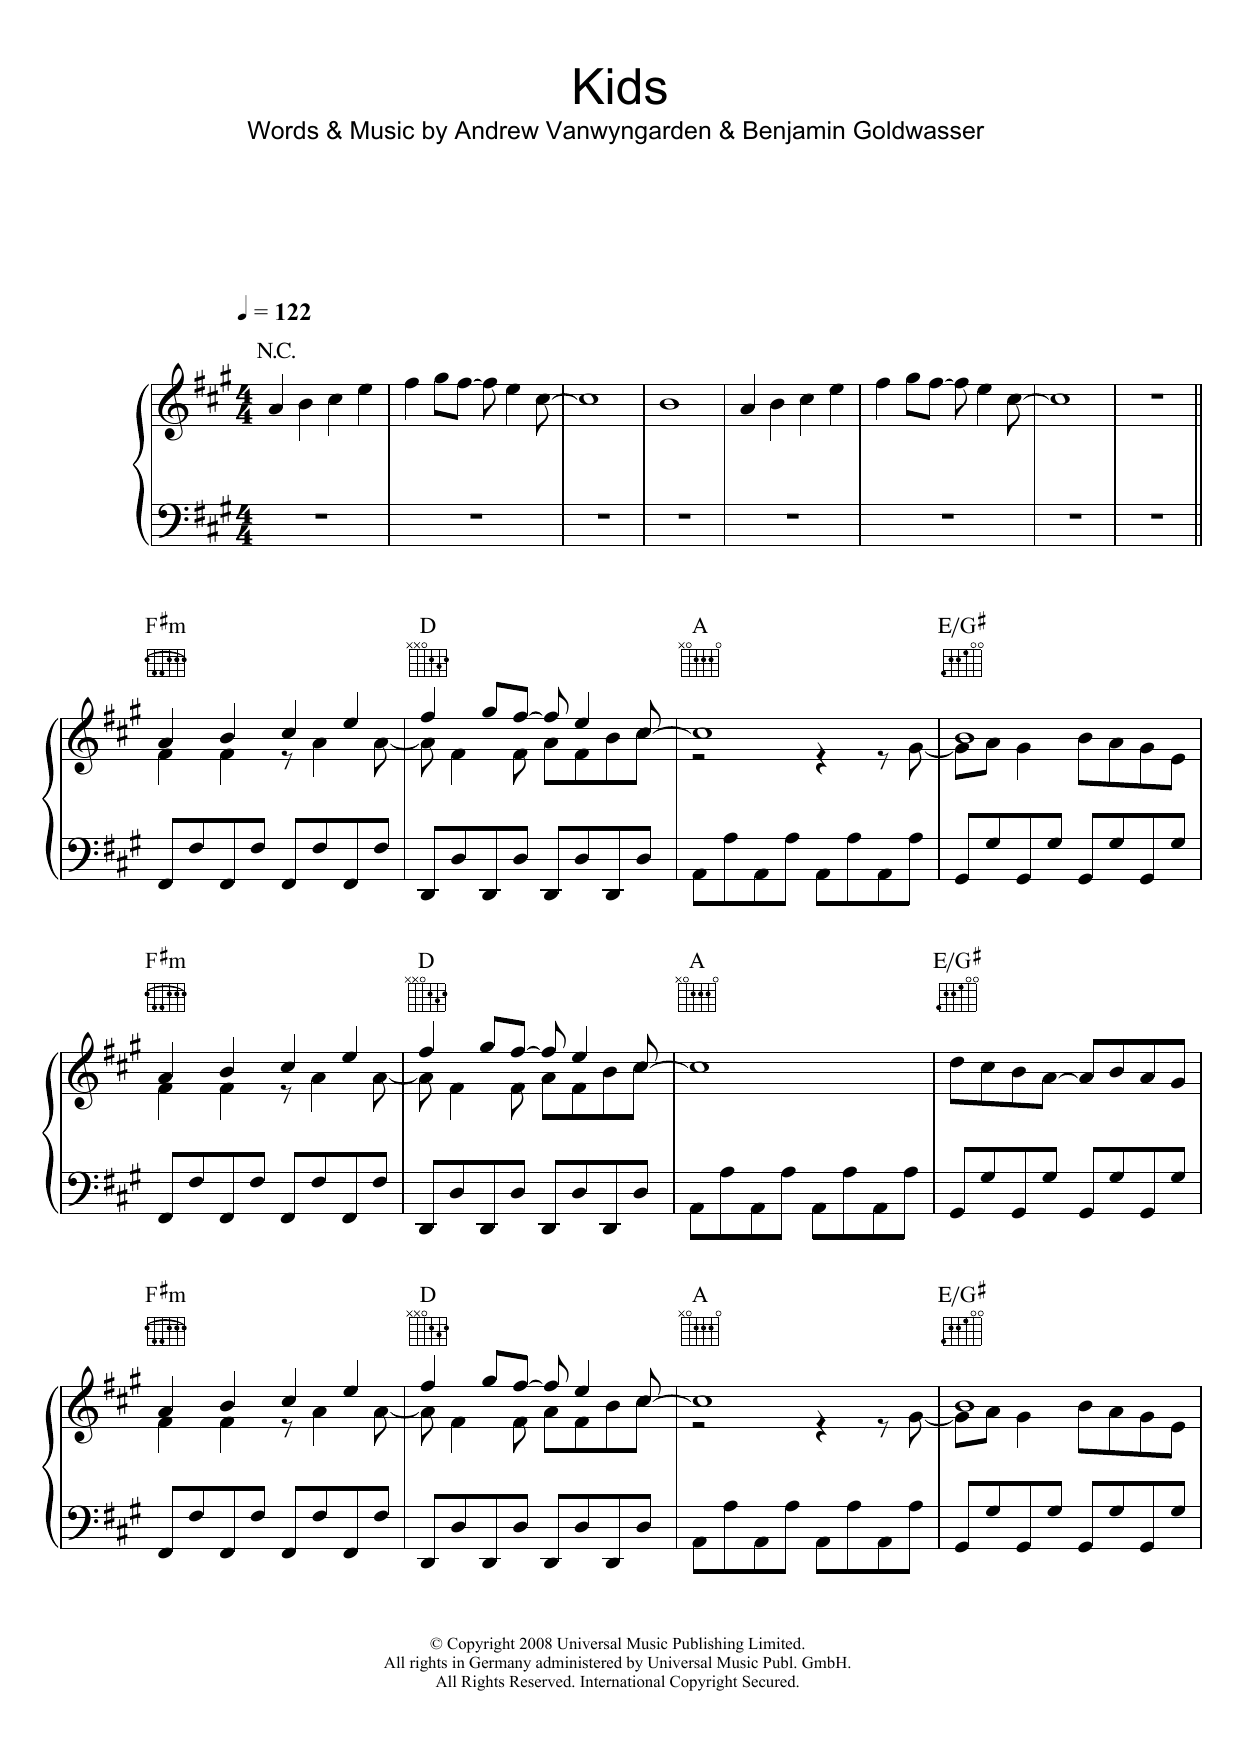 MGMT Kids Sheet Music Notes & Chords for Lyrics & Piano Chords - Download or Print PDF